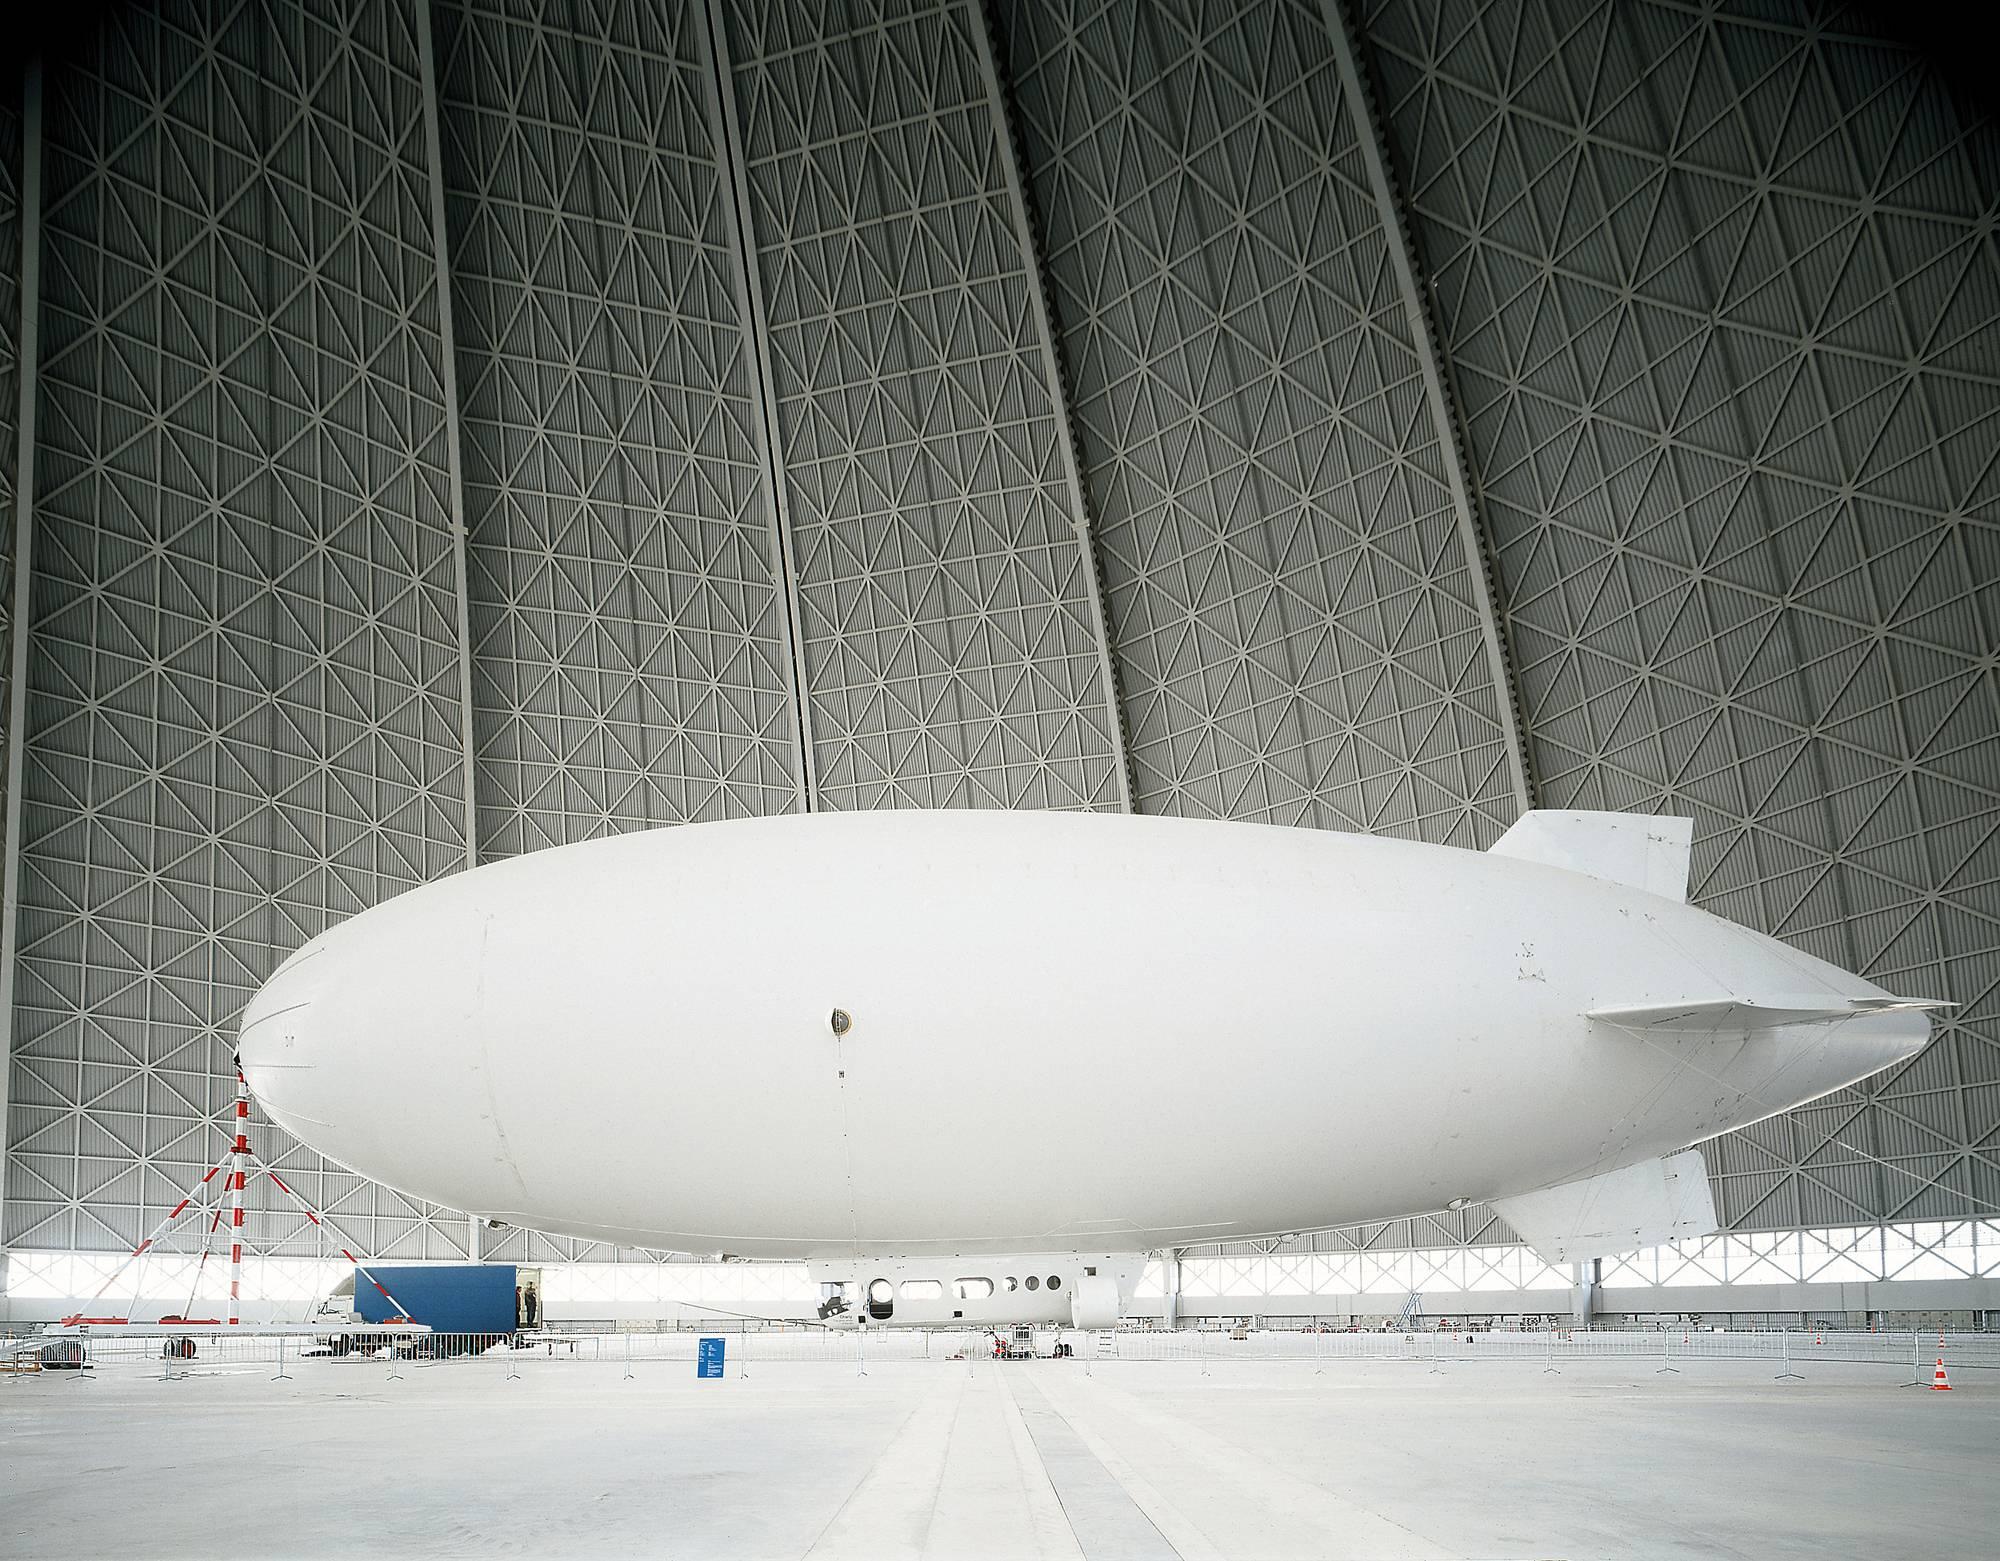 Christian Stoll Color Photograph – Zeppelin (gerahmt) – monumentale Fotografie eines ikonischen Pionierflugzeugs in Hangar